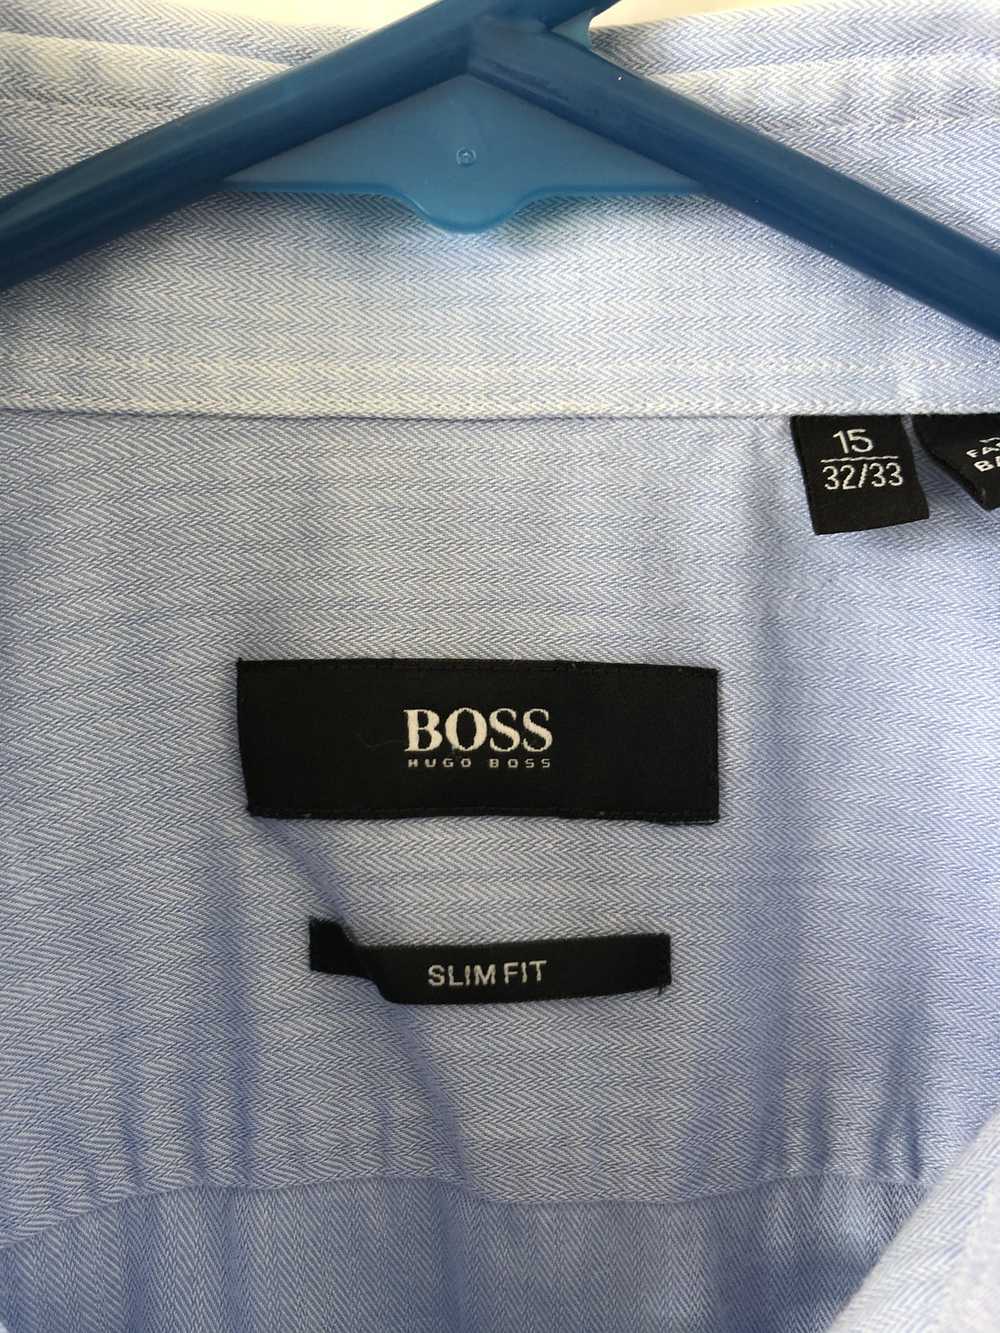 Hugo Boss Hugo Boss Slim Fit Blue Dress Shirt - image 3